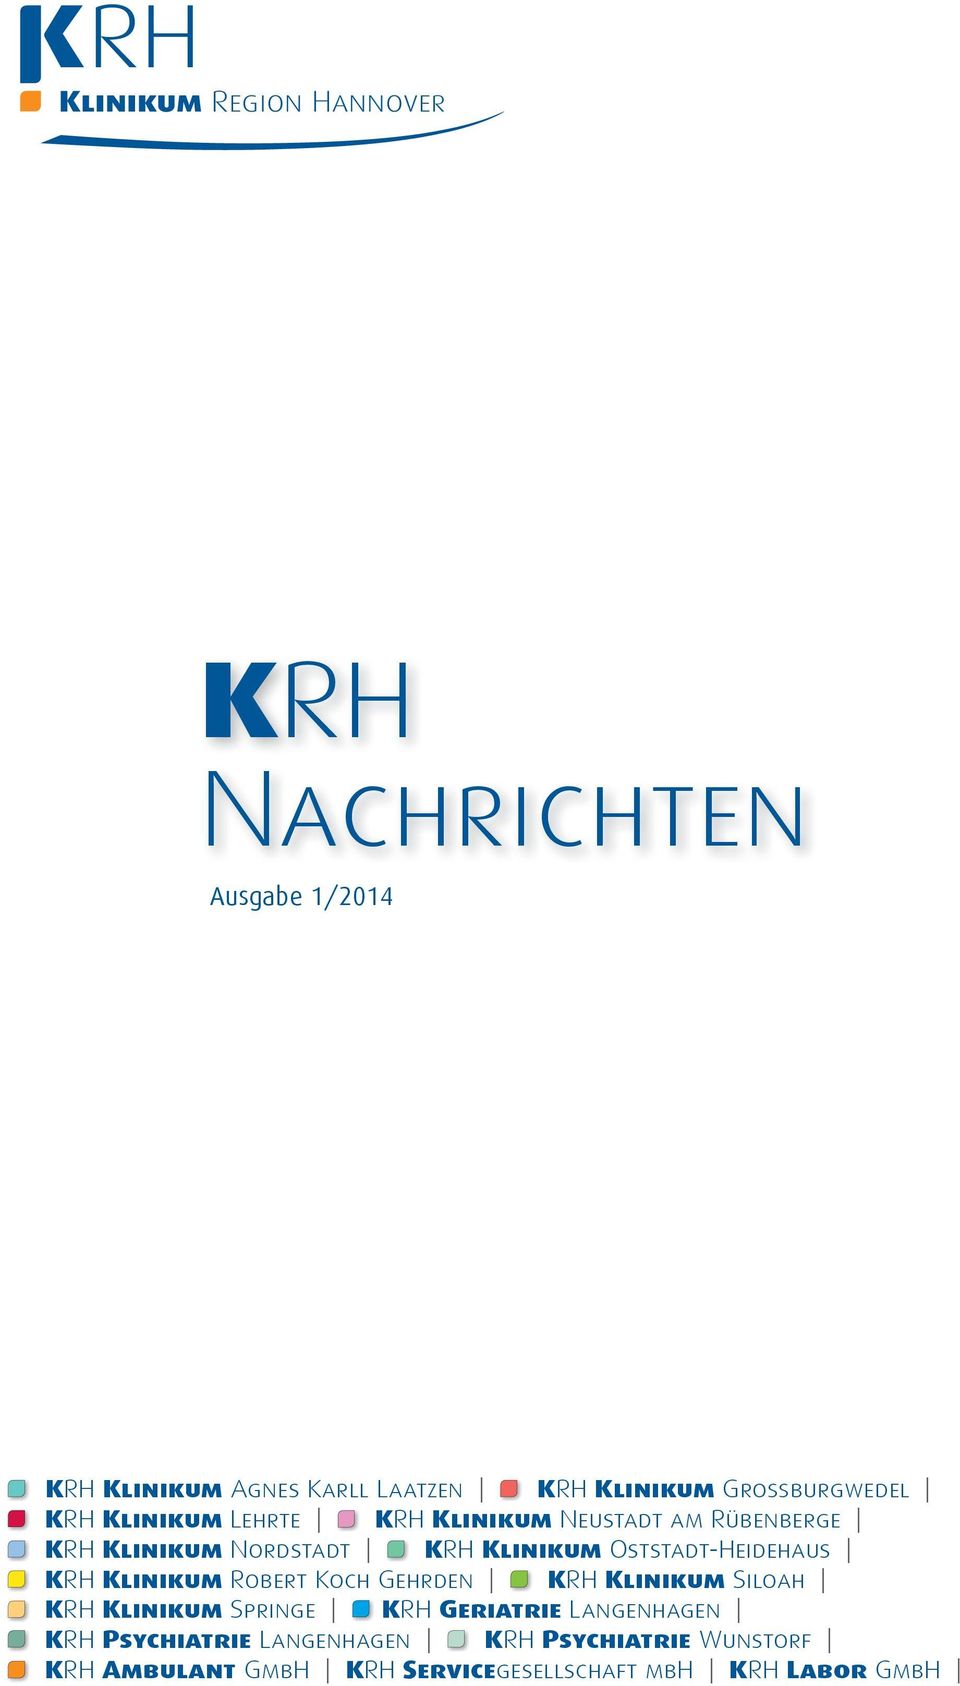 Oststadt-Heidehaus KRH Klinikum Robert Koch Gehrden KRH Klinikum Siloah KRH Klinikum Springe KRH Geriatrie